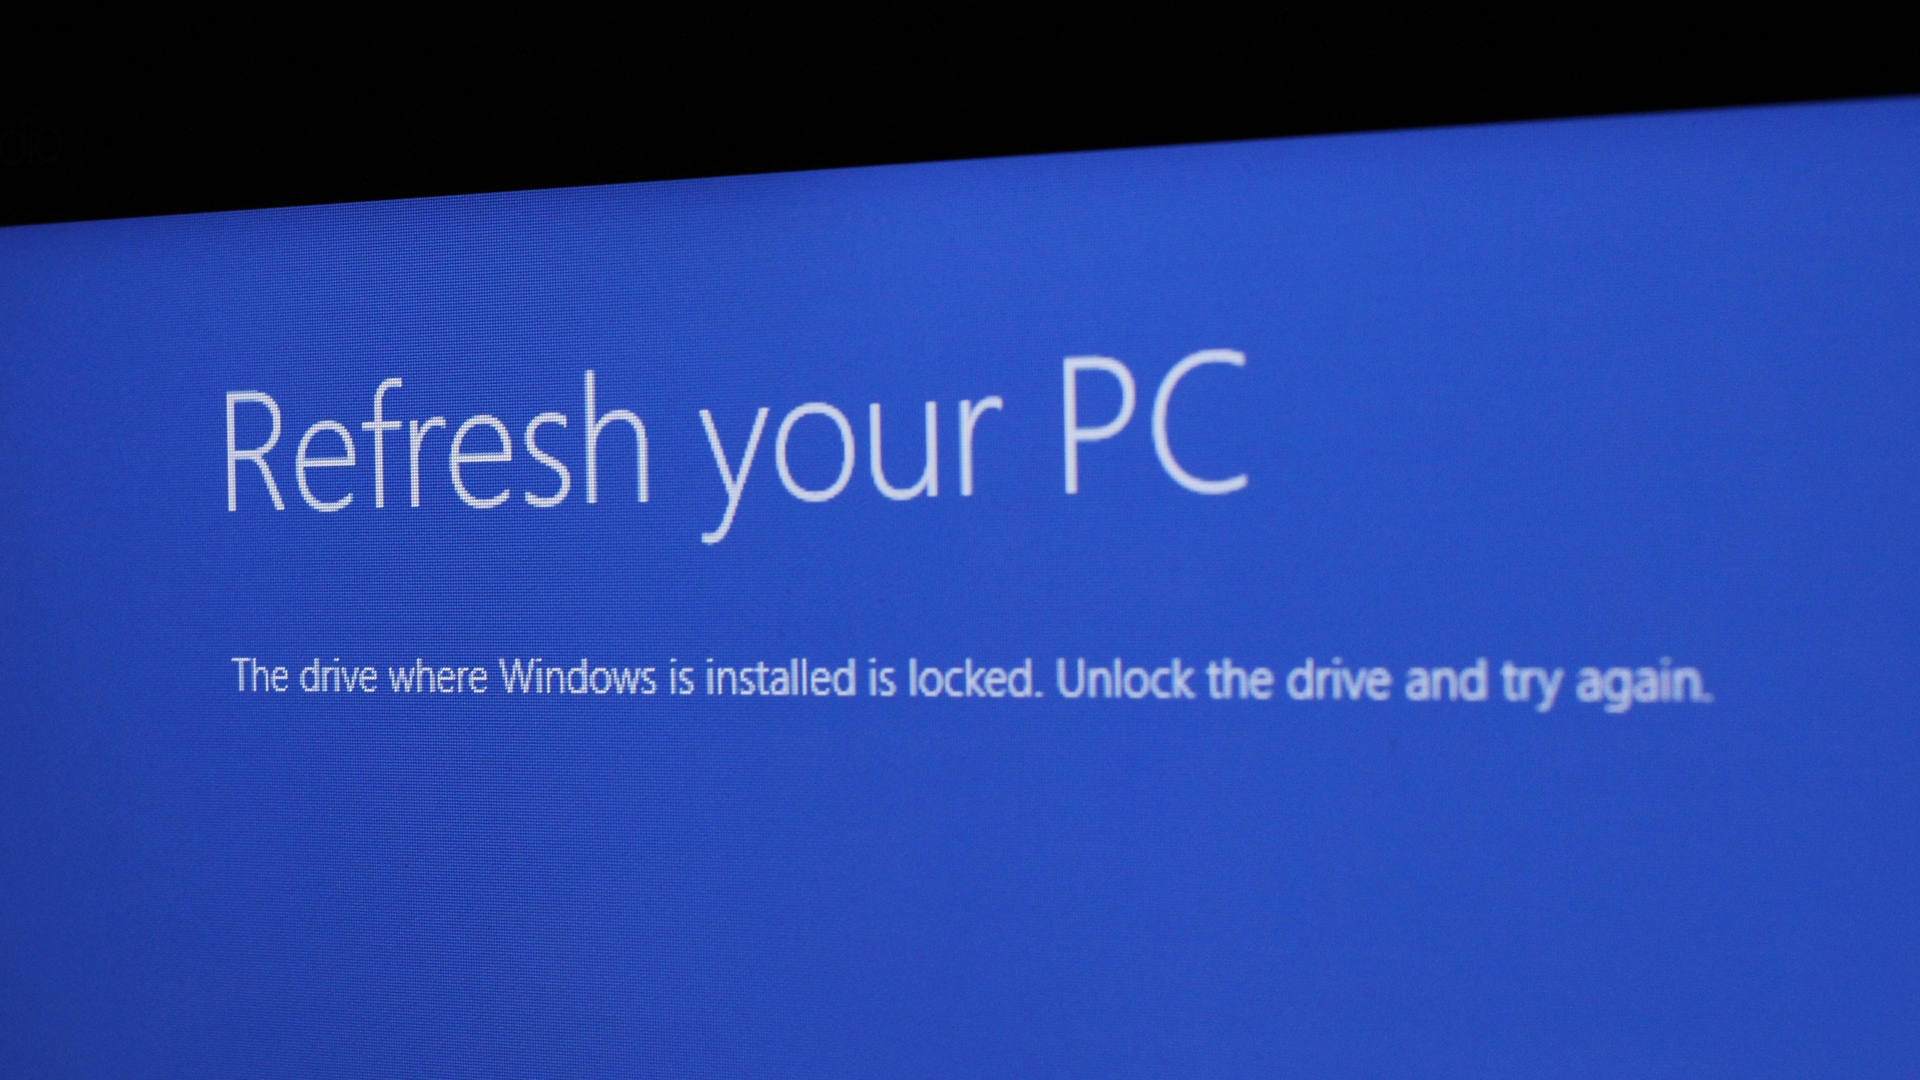 Windows 8.1 drive is locked